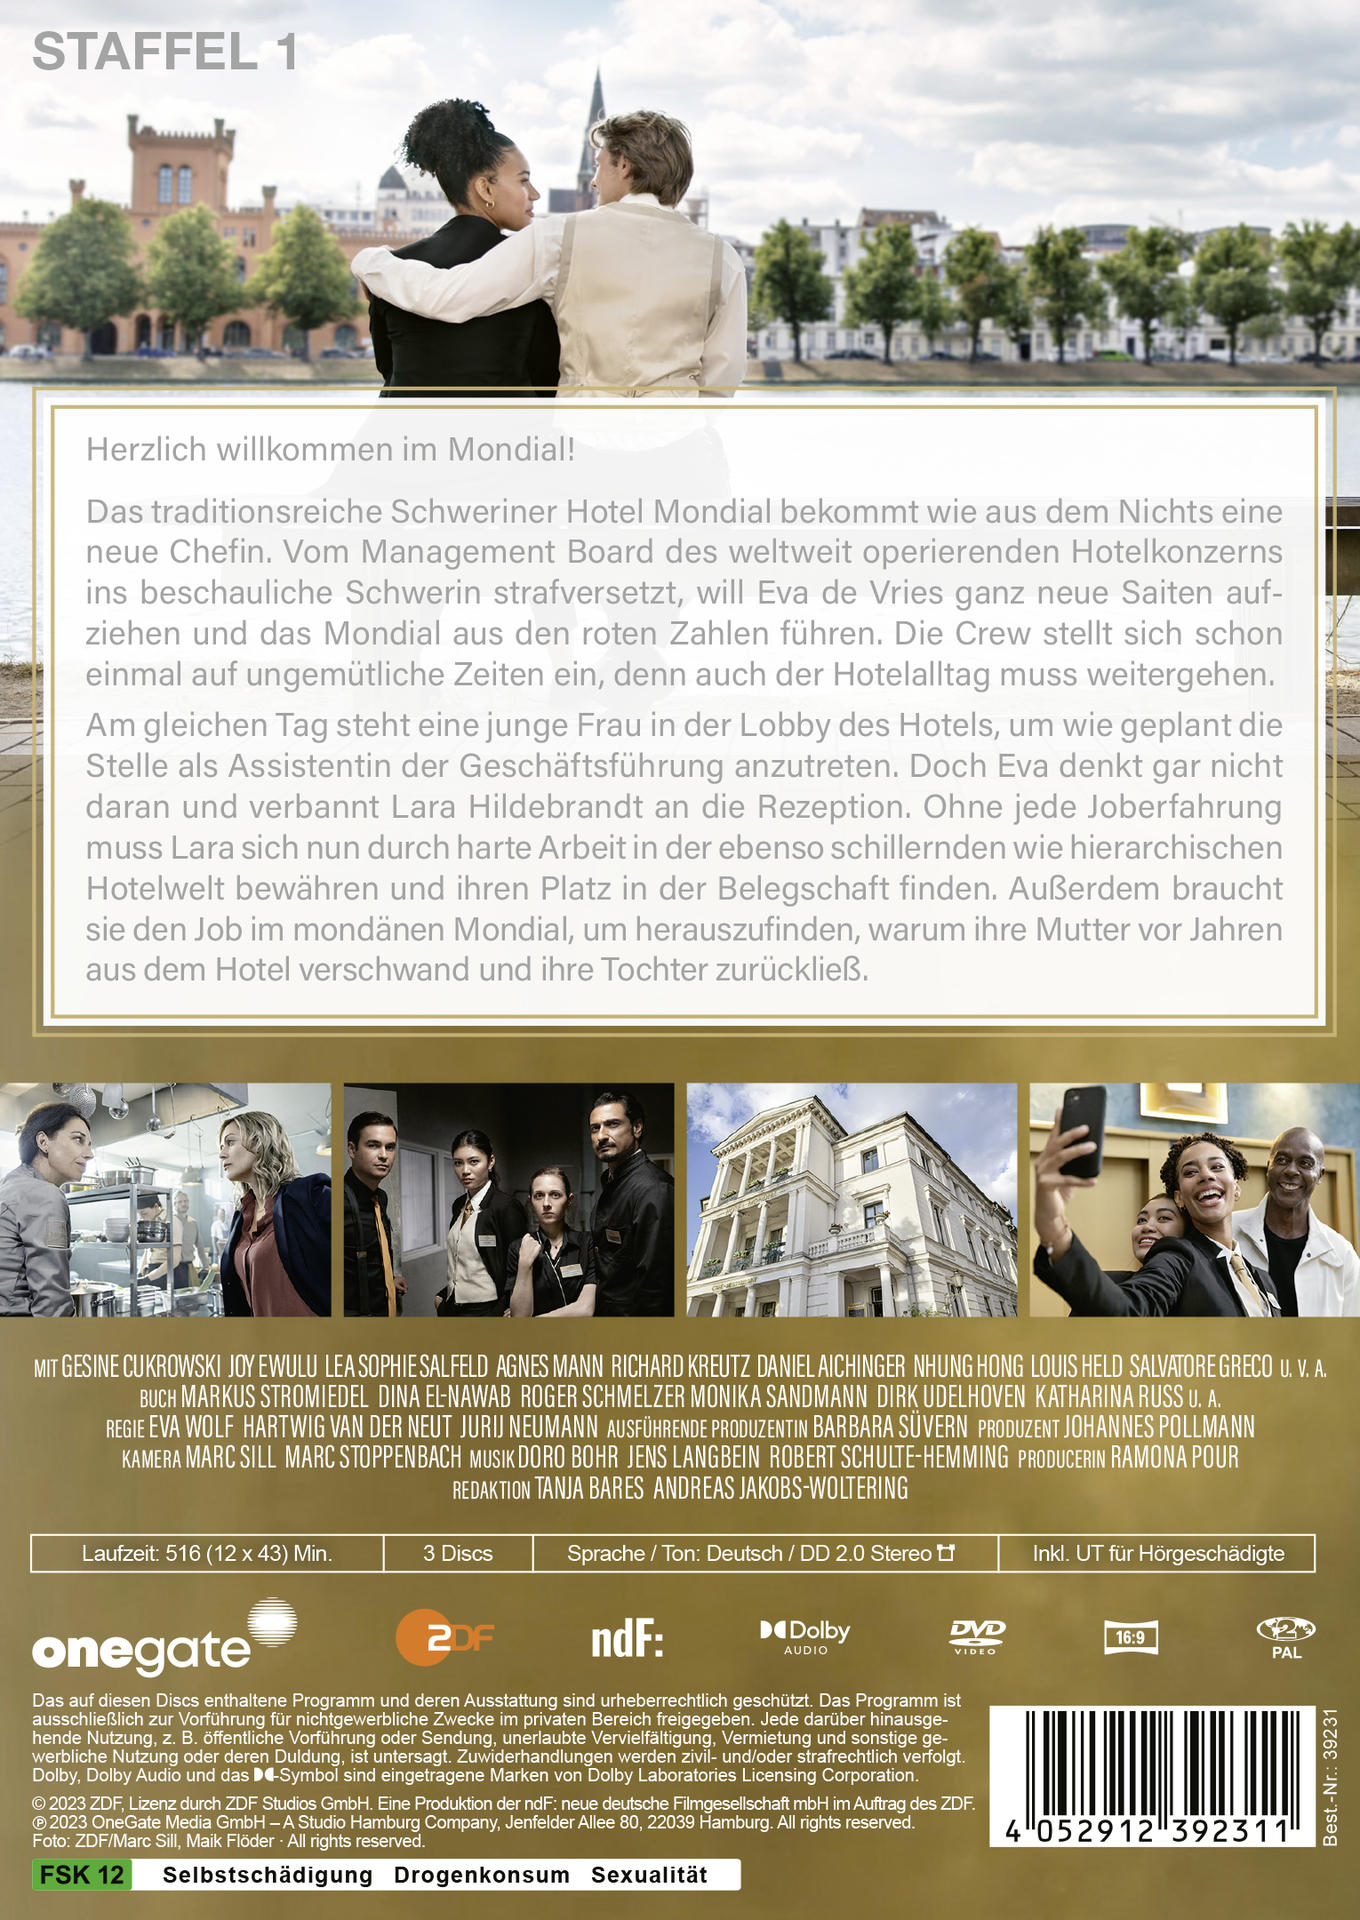 Hotel Mondial DVD Staffel 1 